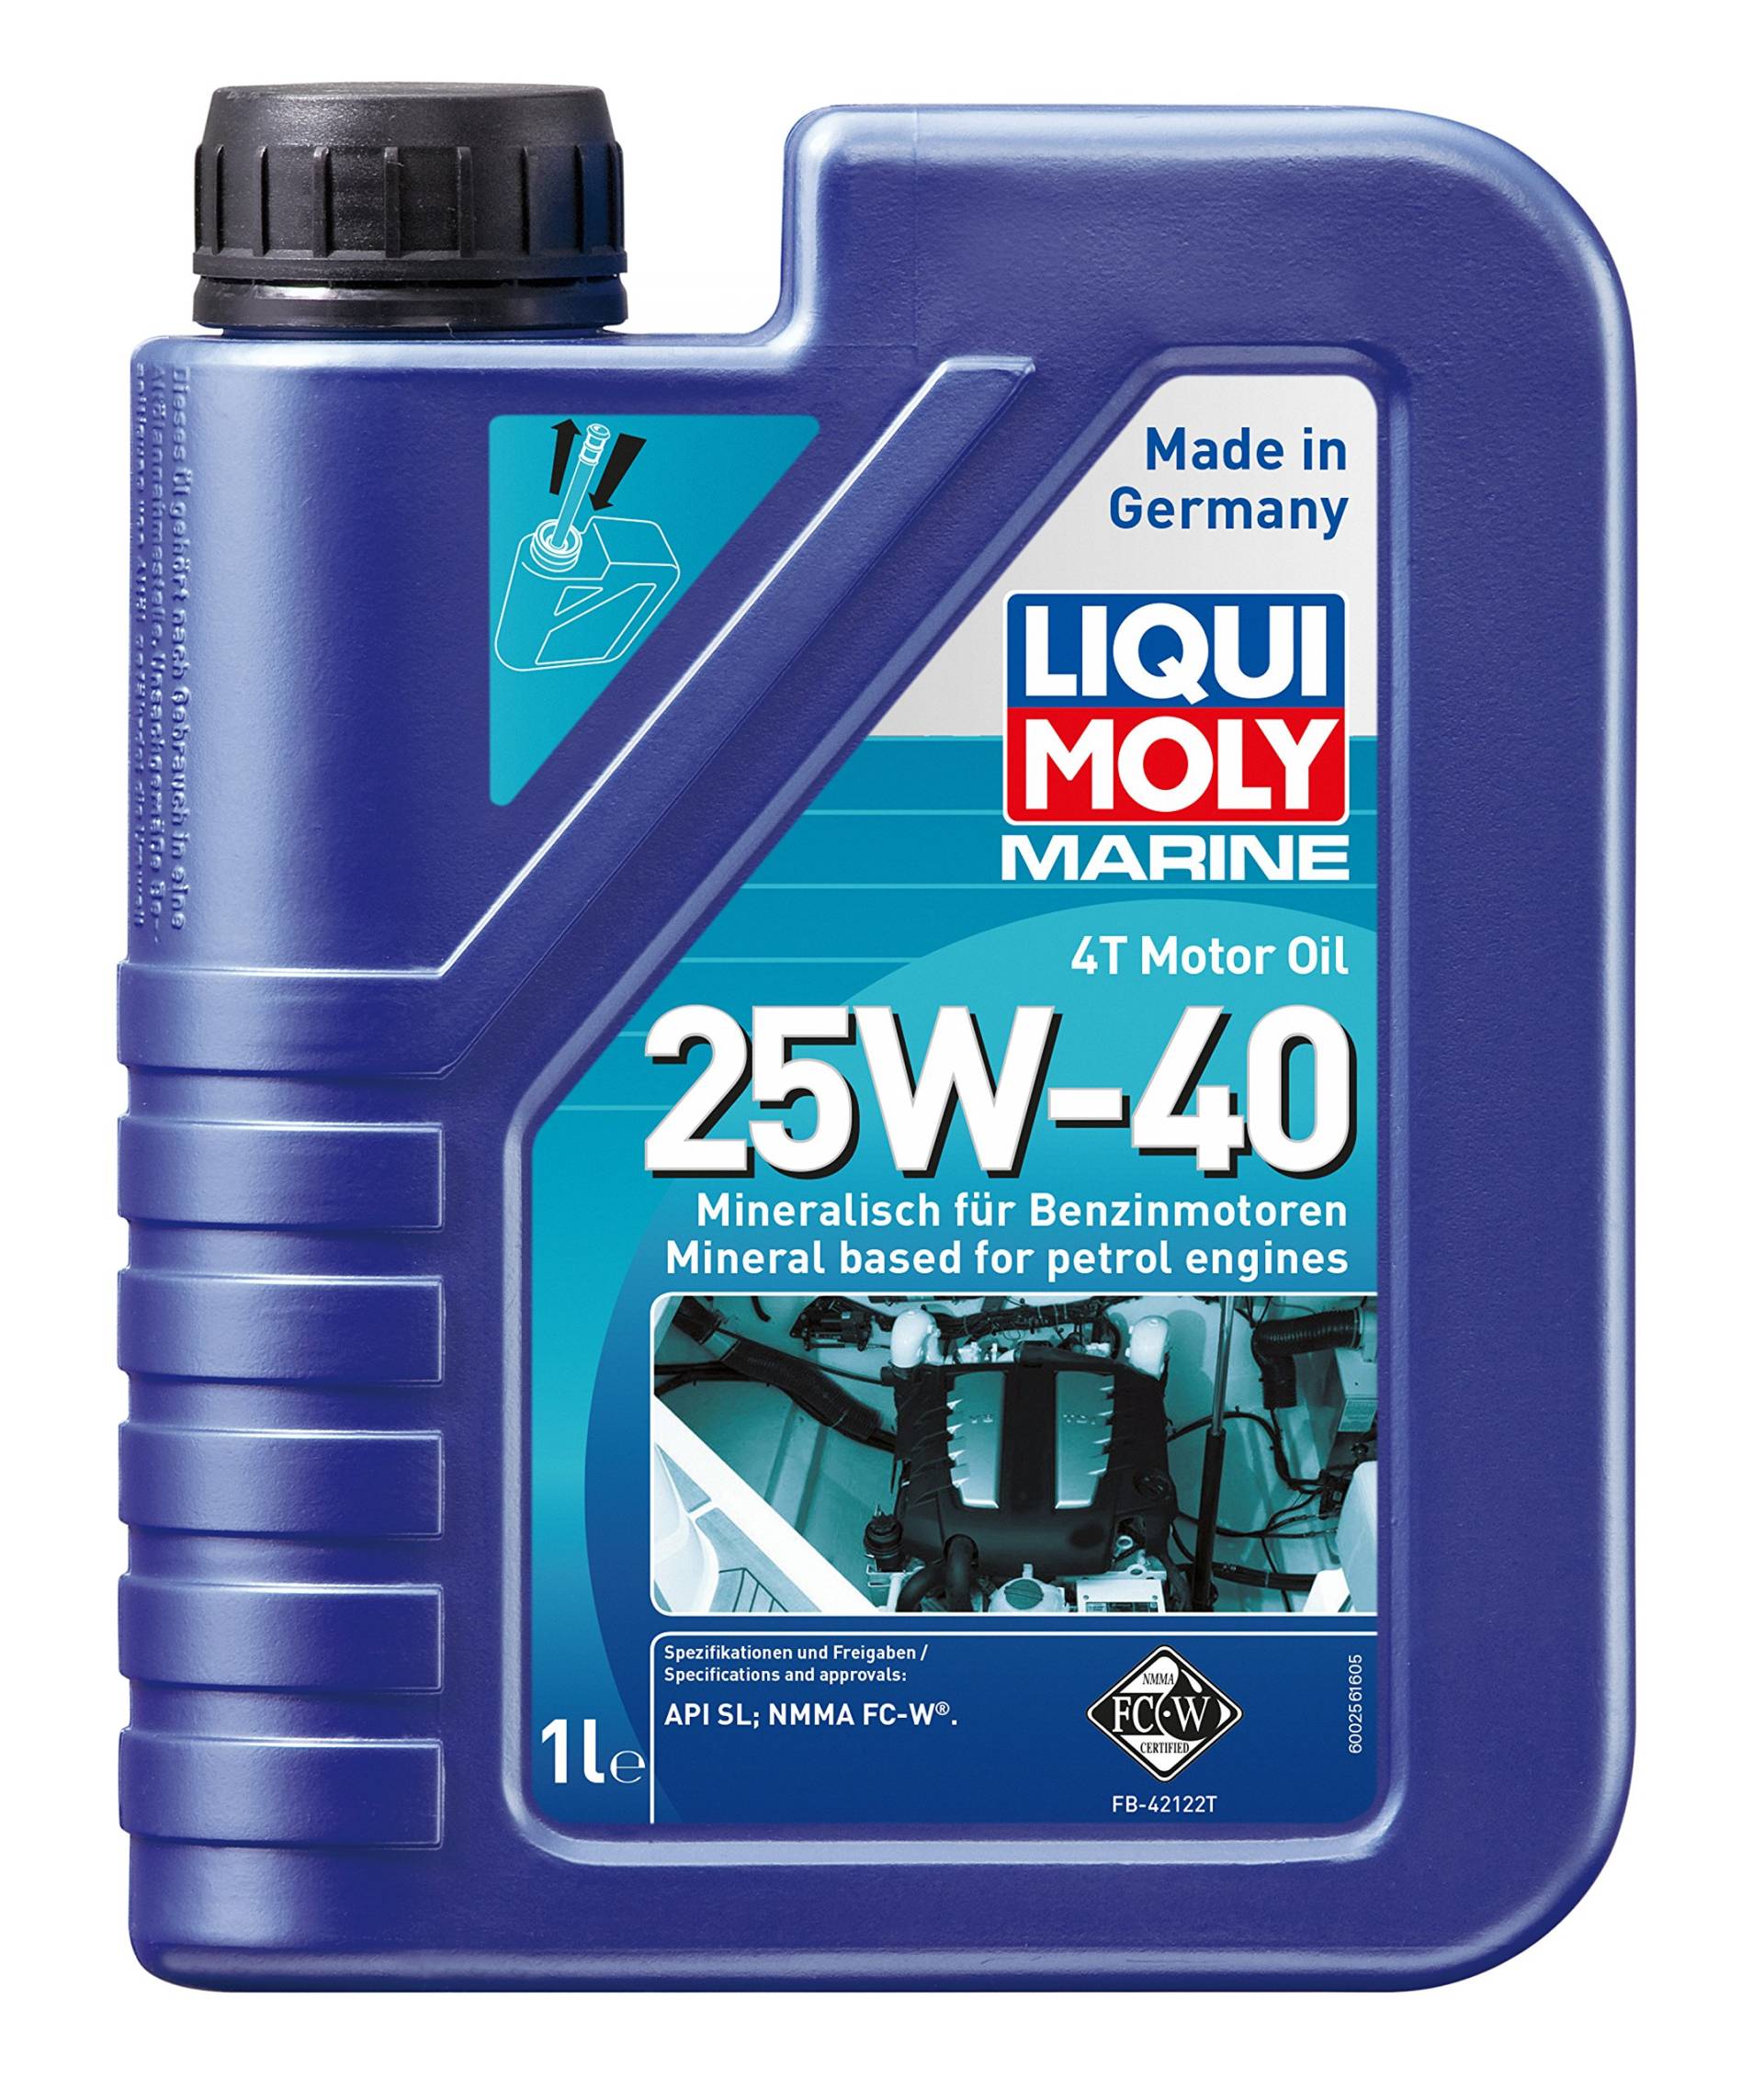 LIQUI MOLY Marine 4T Motor Oil 25W-40 | 1 L | Boot mineralisches Motoröl | Art.-Nr.: 25026 von Liqui Moly